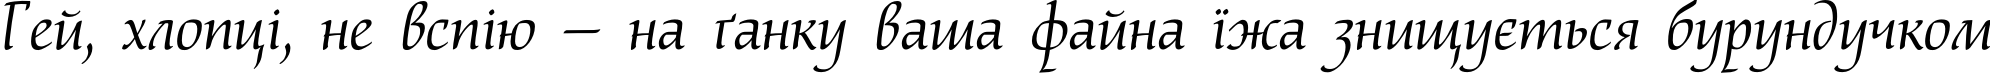 Пример написания шрифтом NataliScript текста на украинском